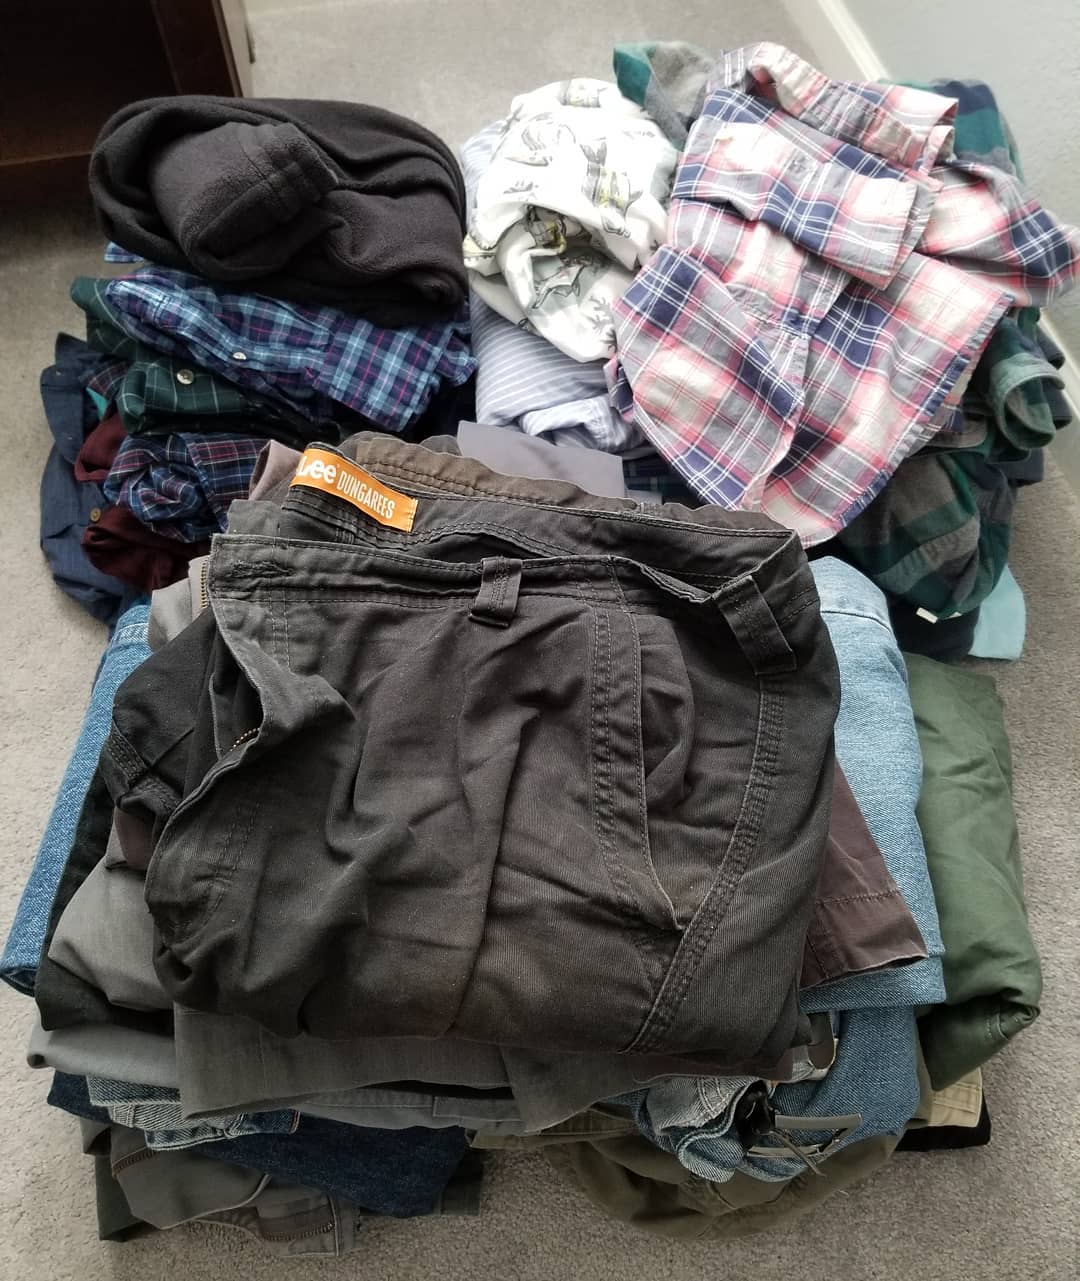 Old clothes folded on floor. Photo by Instagram user @davegregor2018